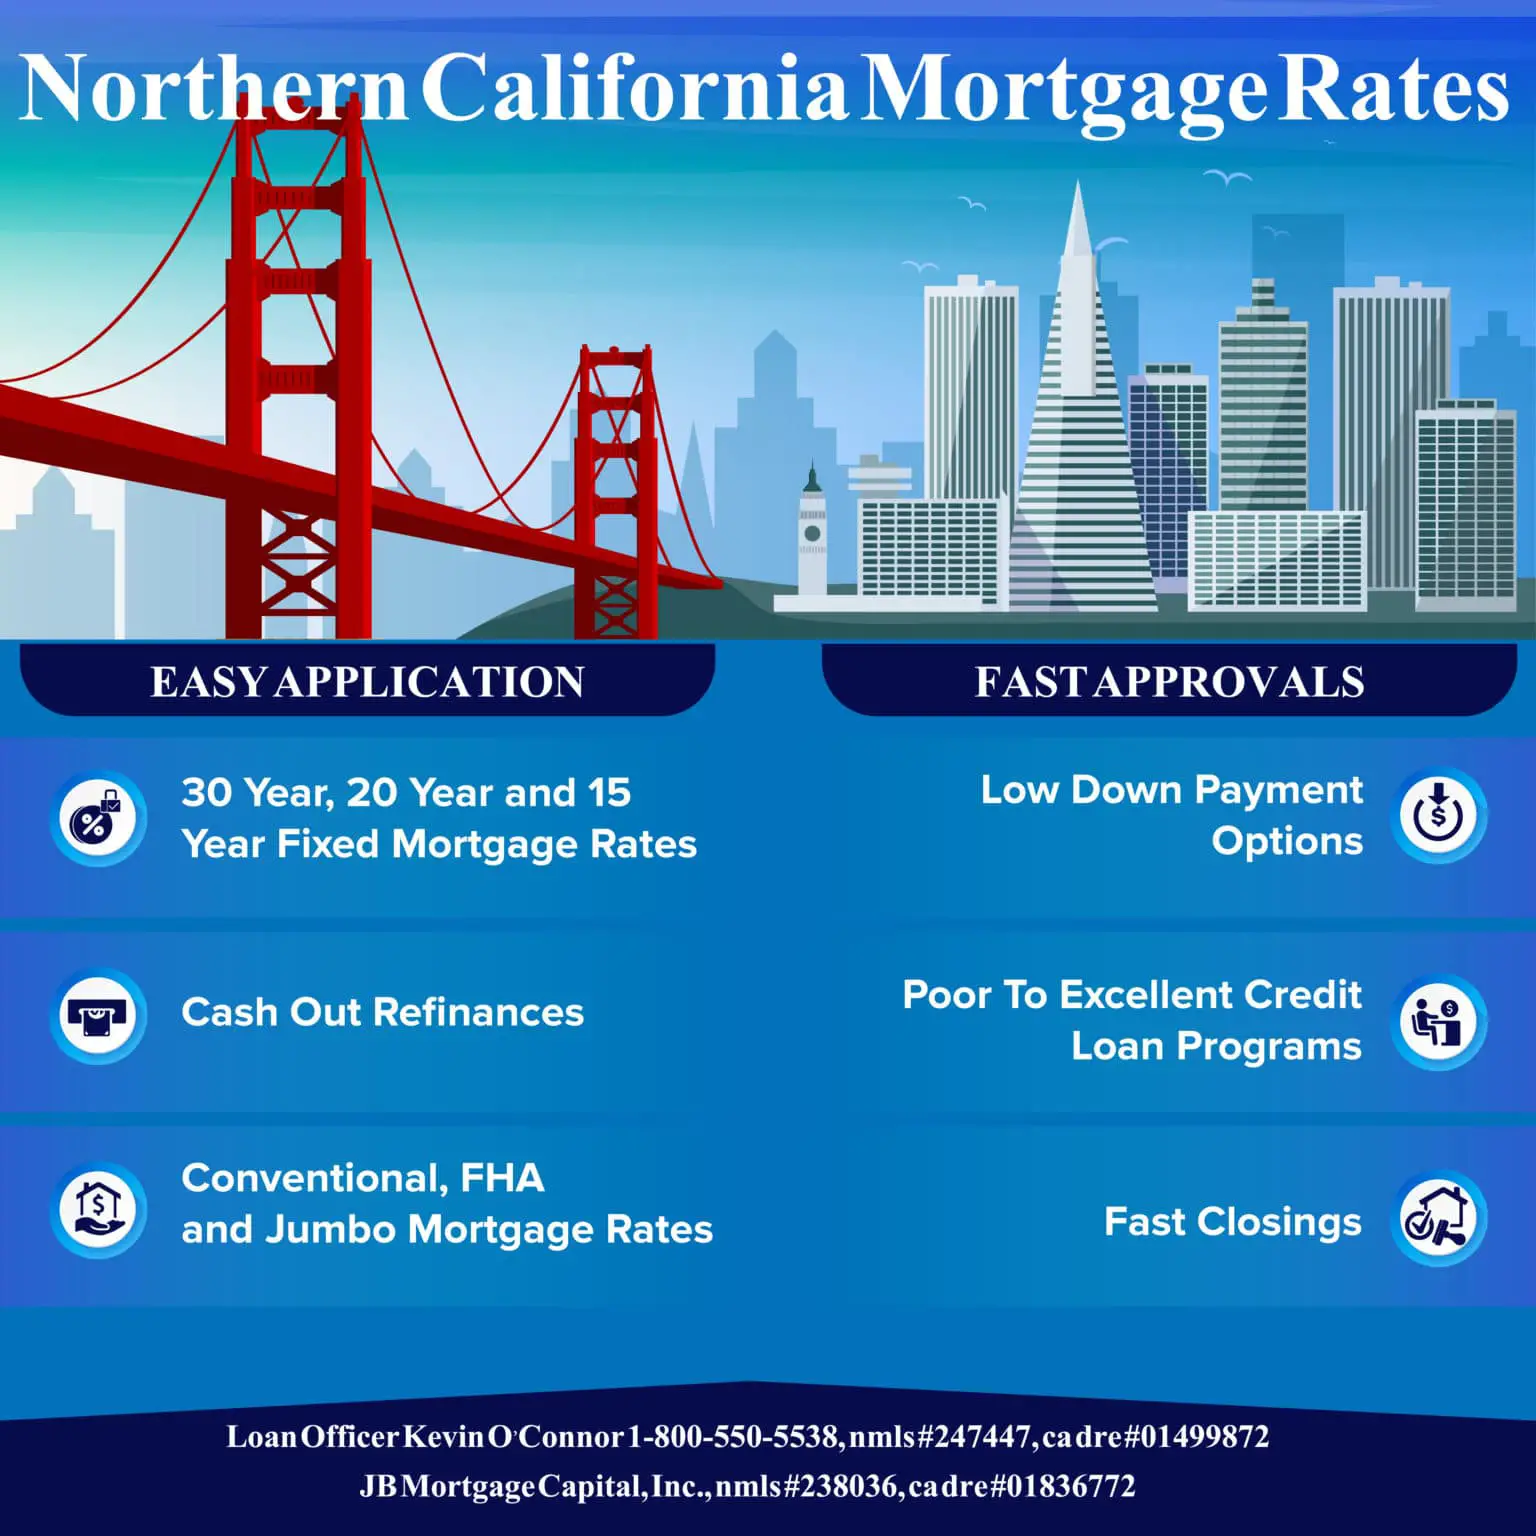 Northern California Mortgage Rates